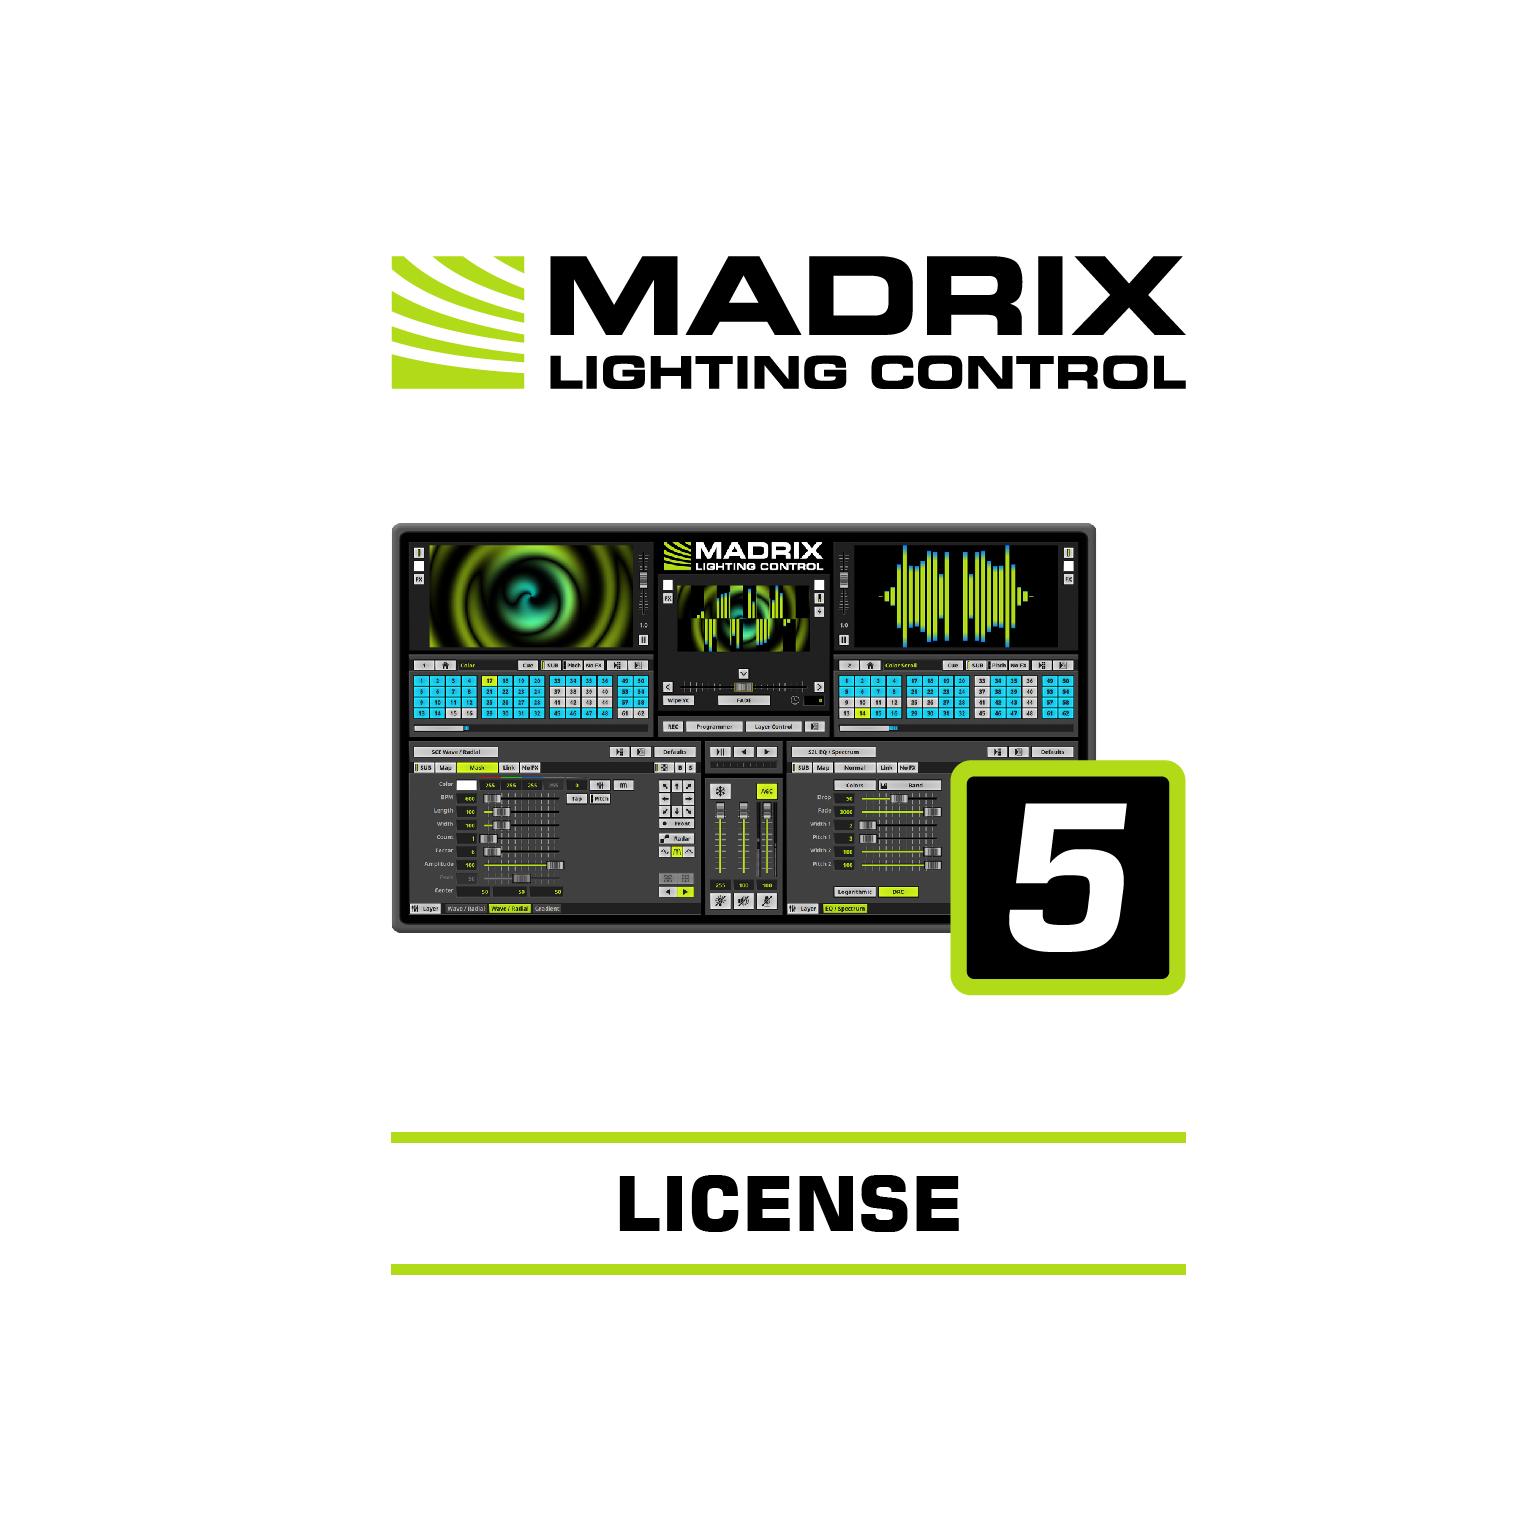 MADRIX Software 5 License basic